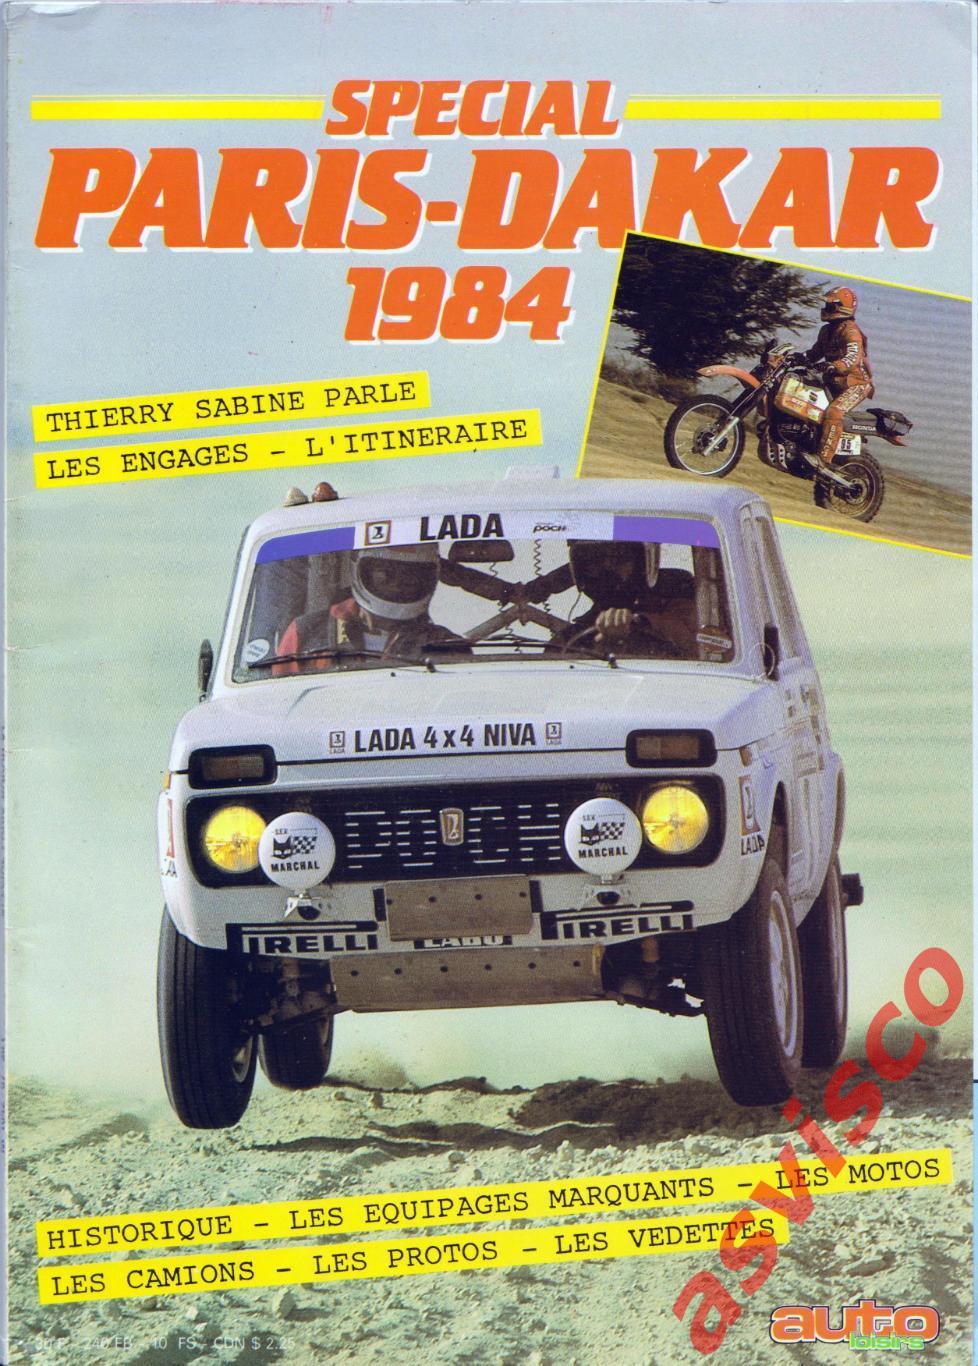 SPECIAL PARIS - DAKAR - 1984. Представление команд.